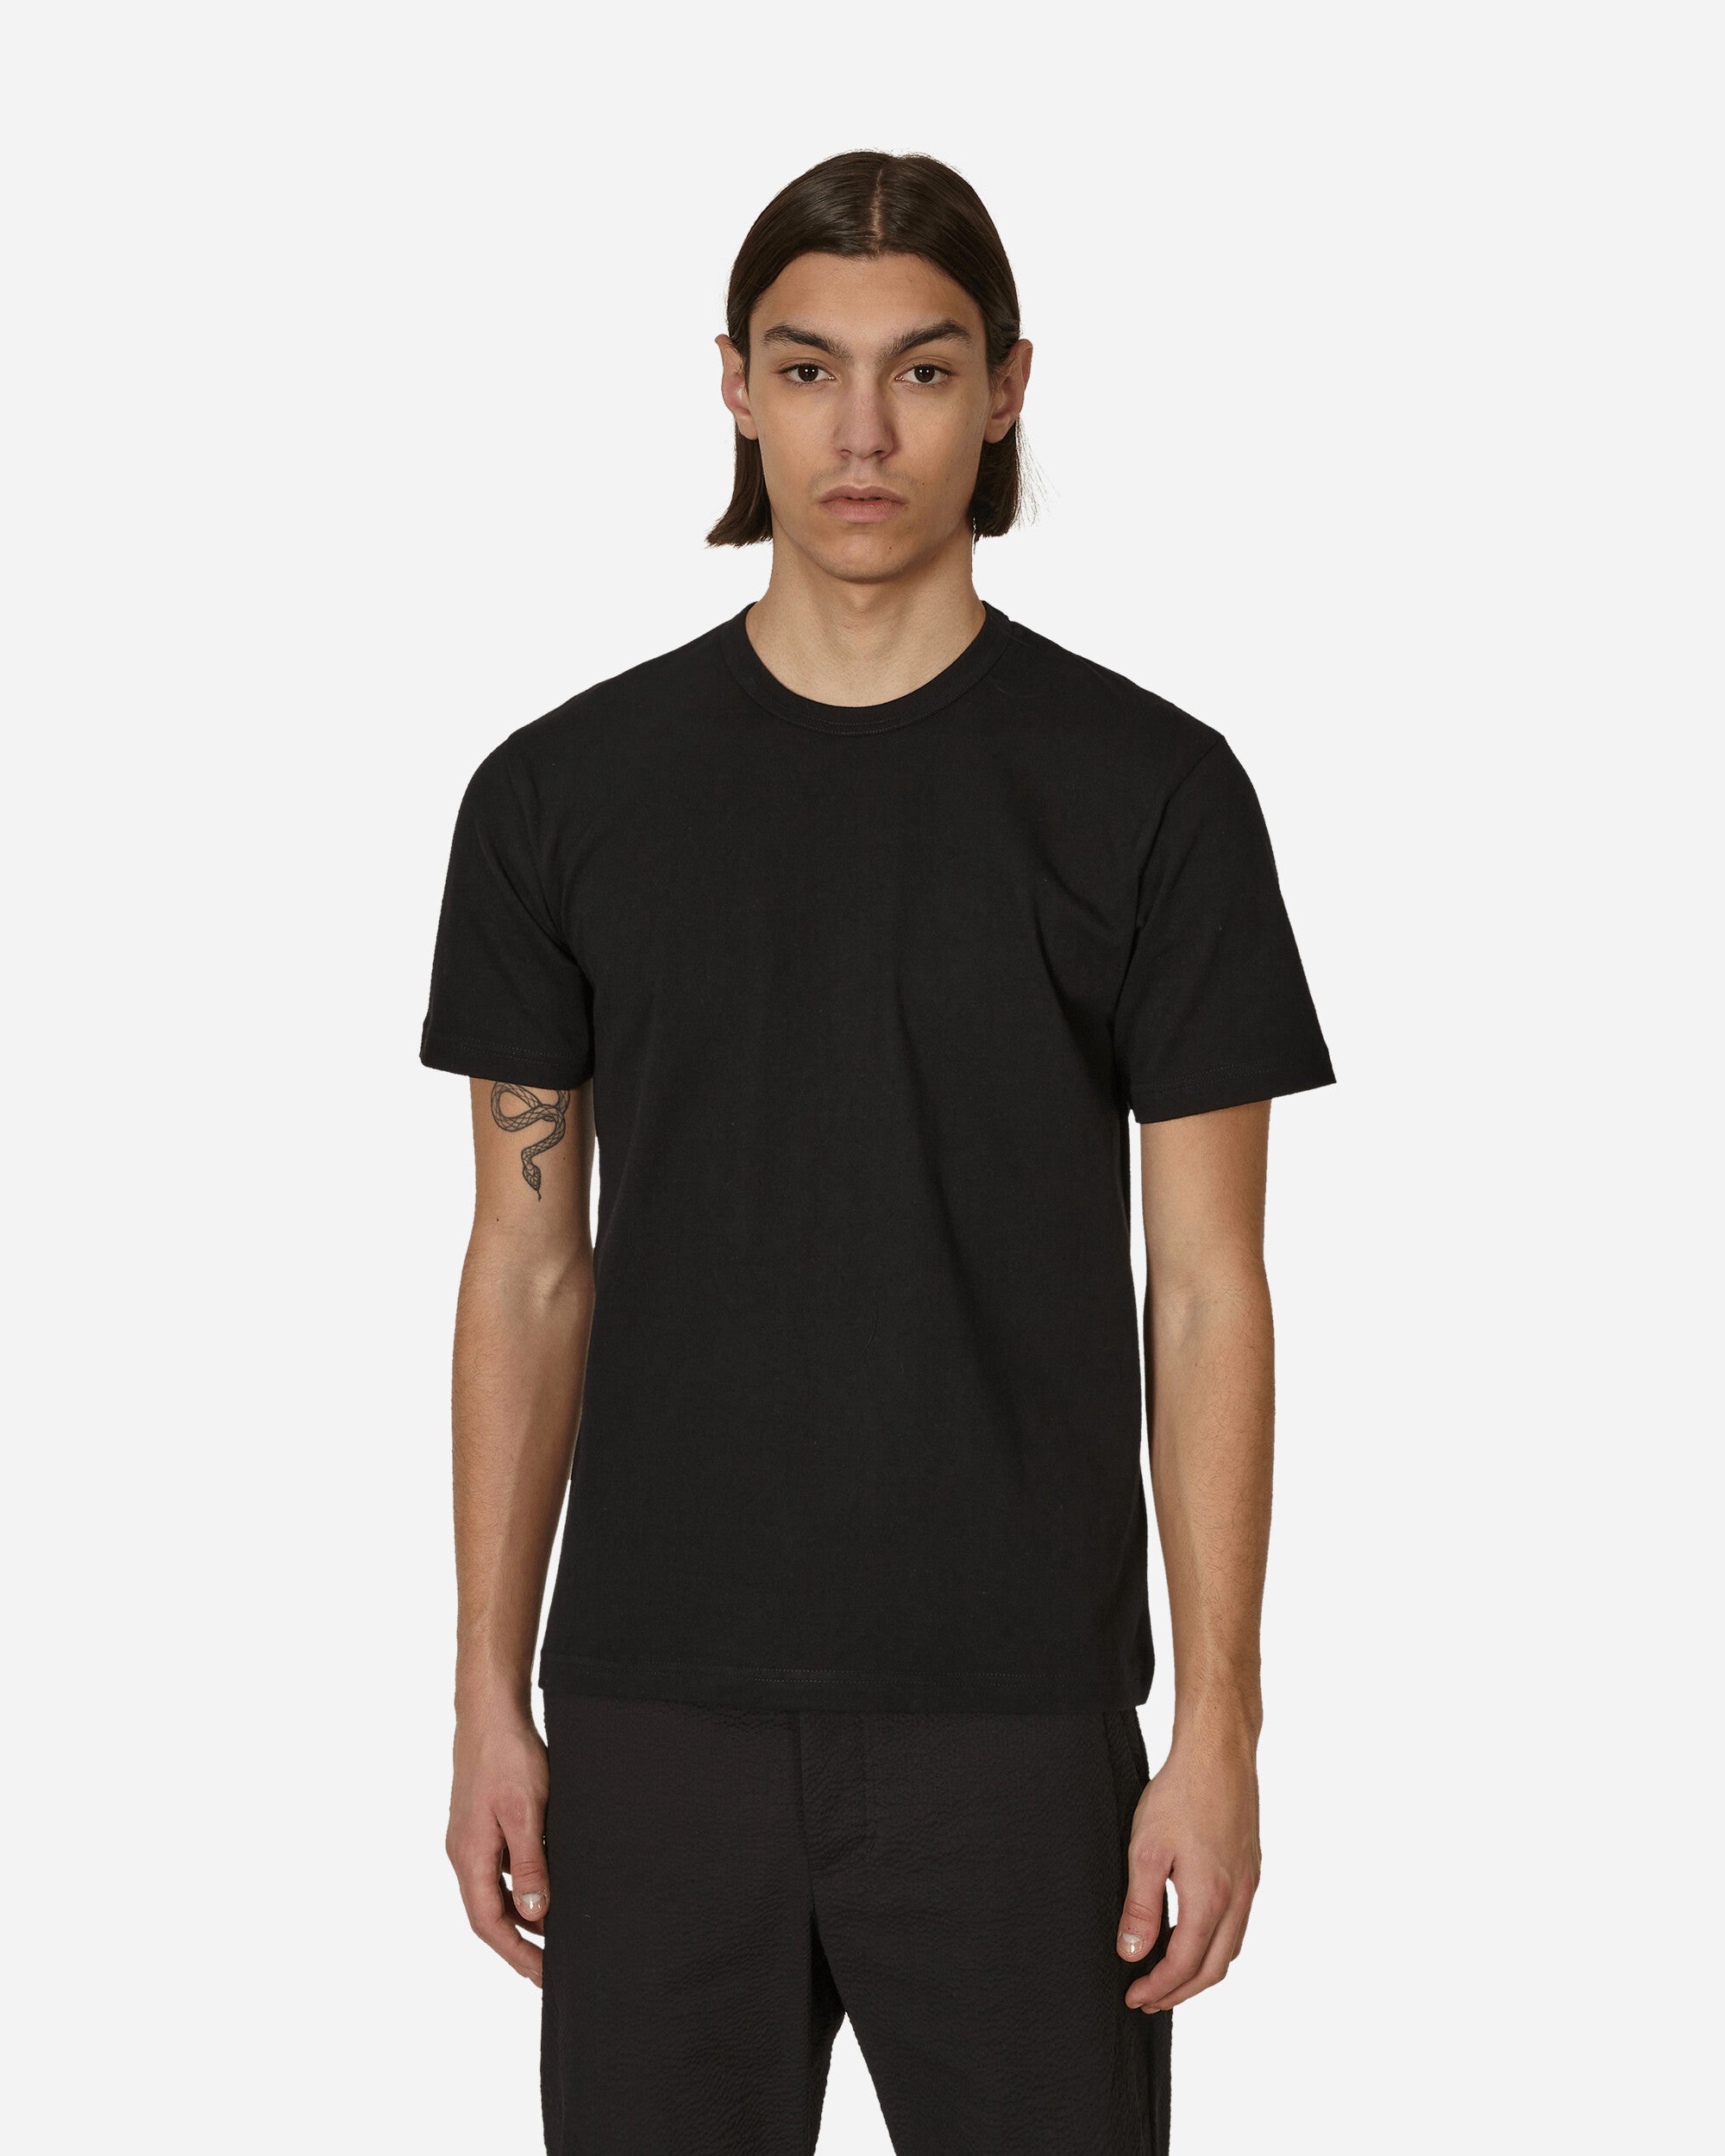 Comme Des Garçons Black T-Shirt Black/White T-Shirts Shortsleeve 1K-T108-S23 1